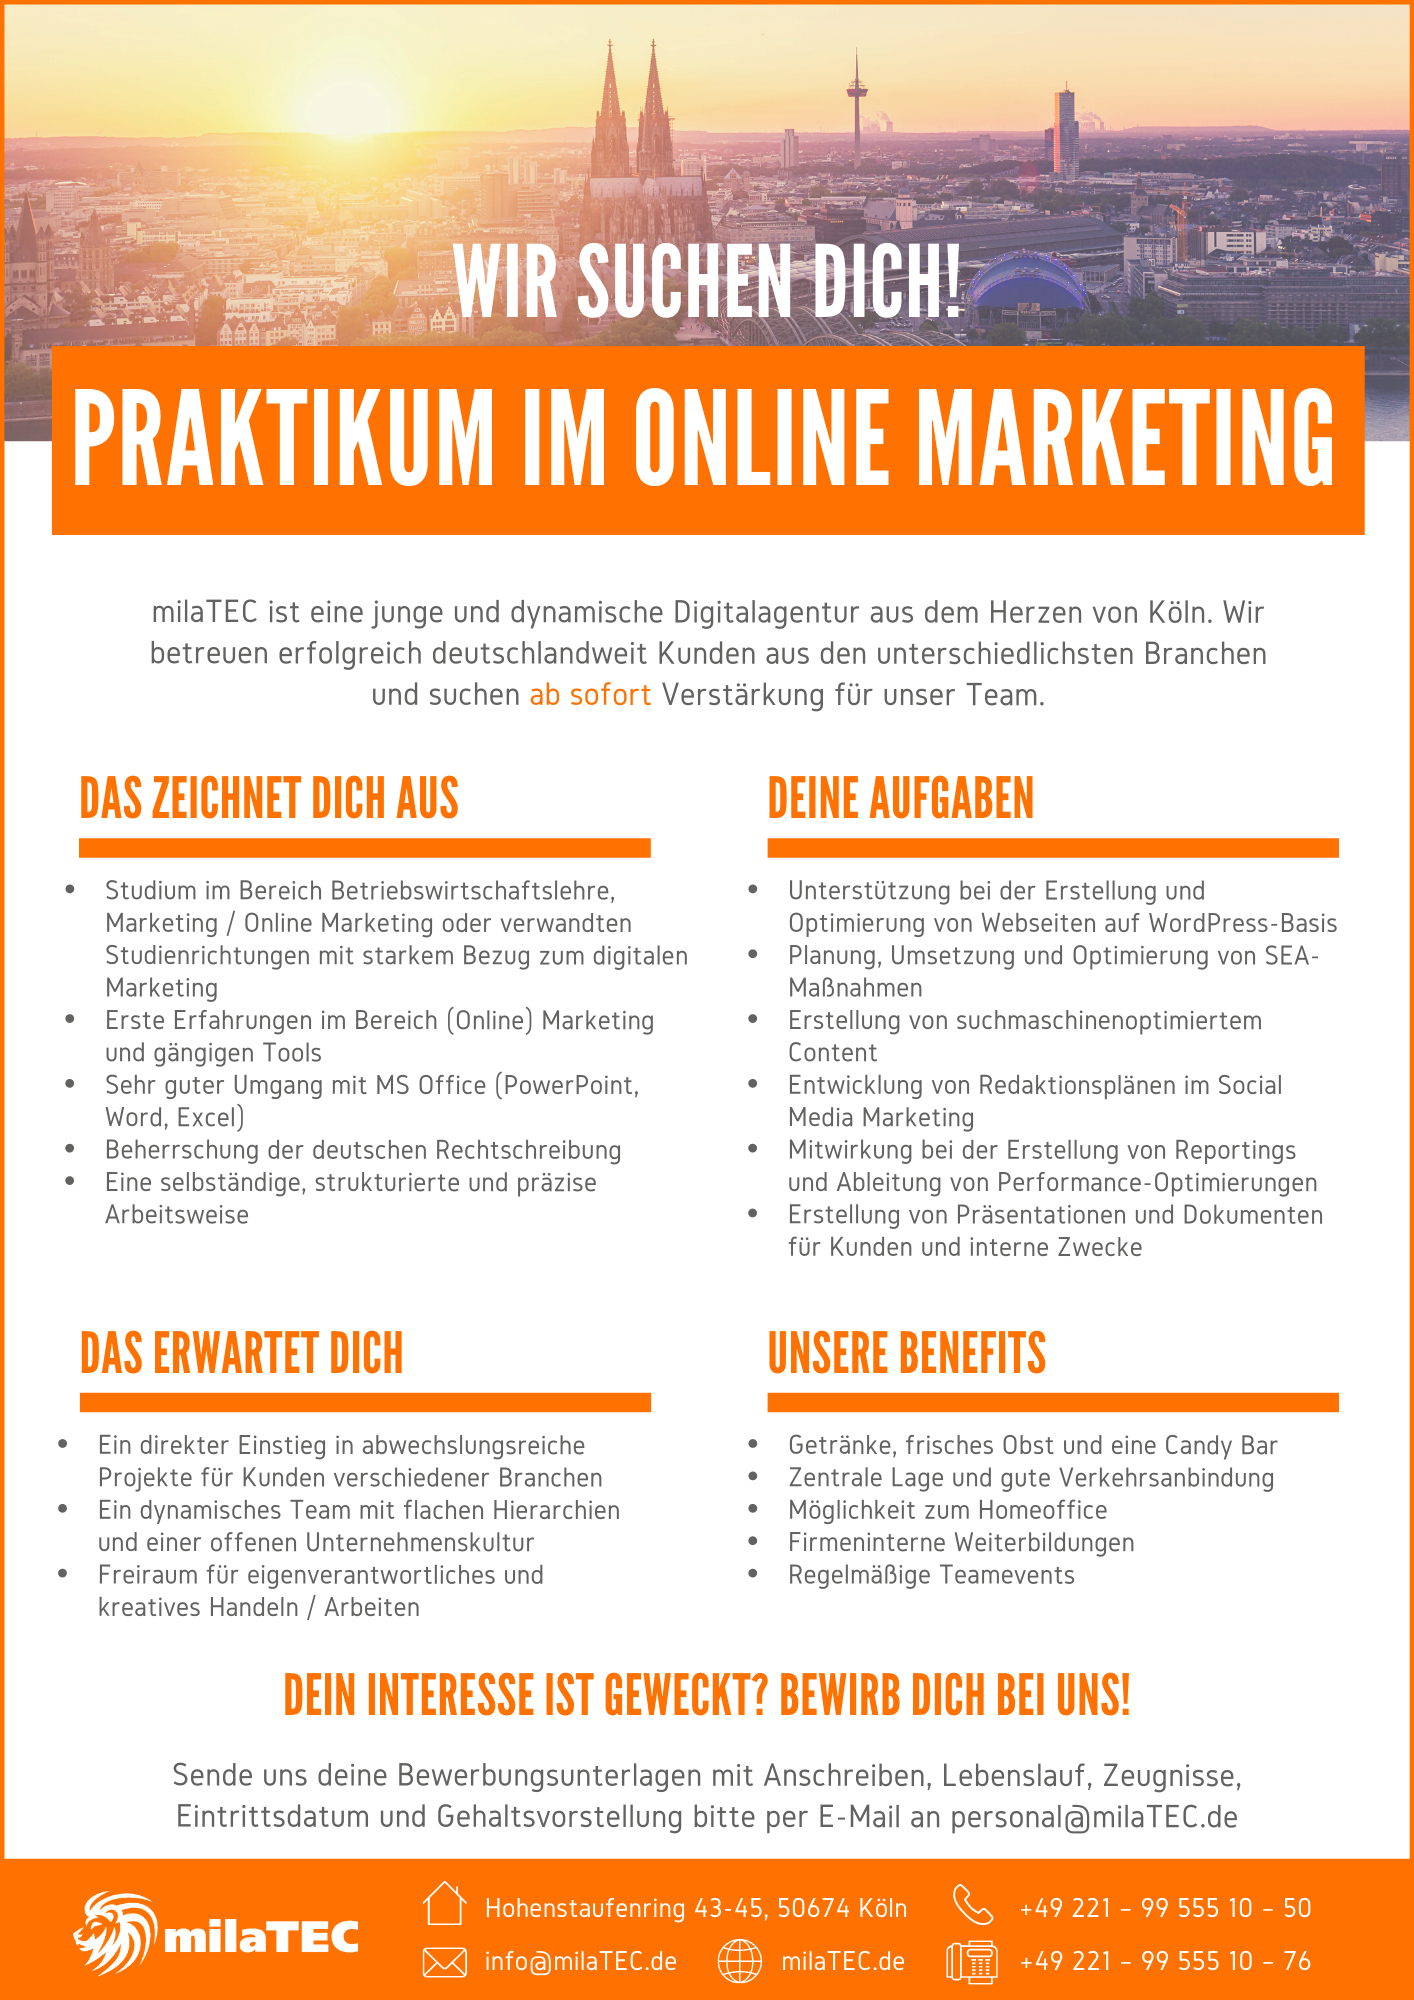 Praktikum im Online Marketing